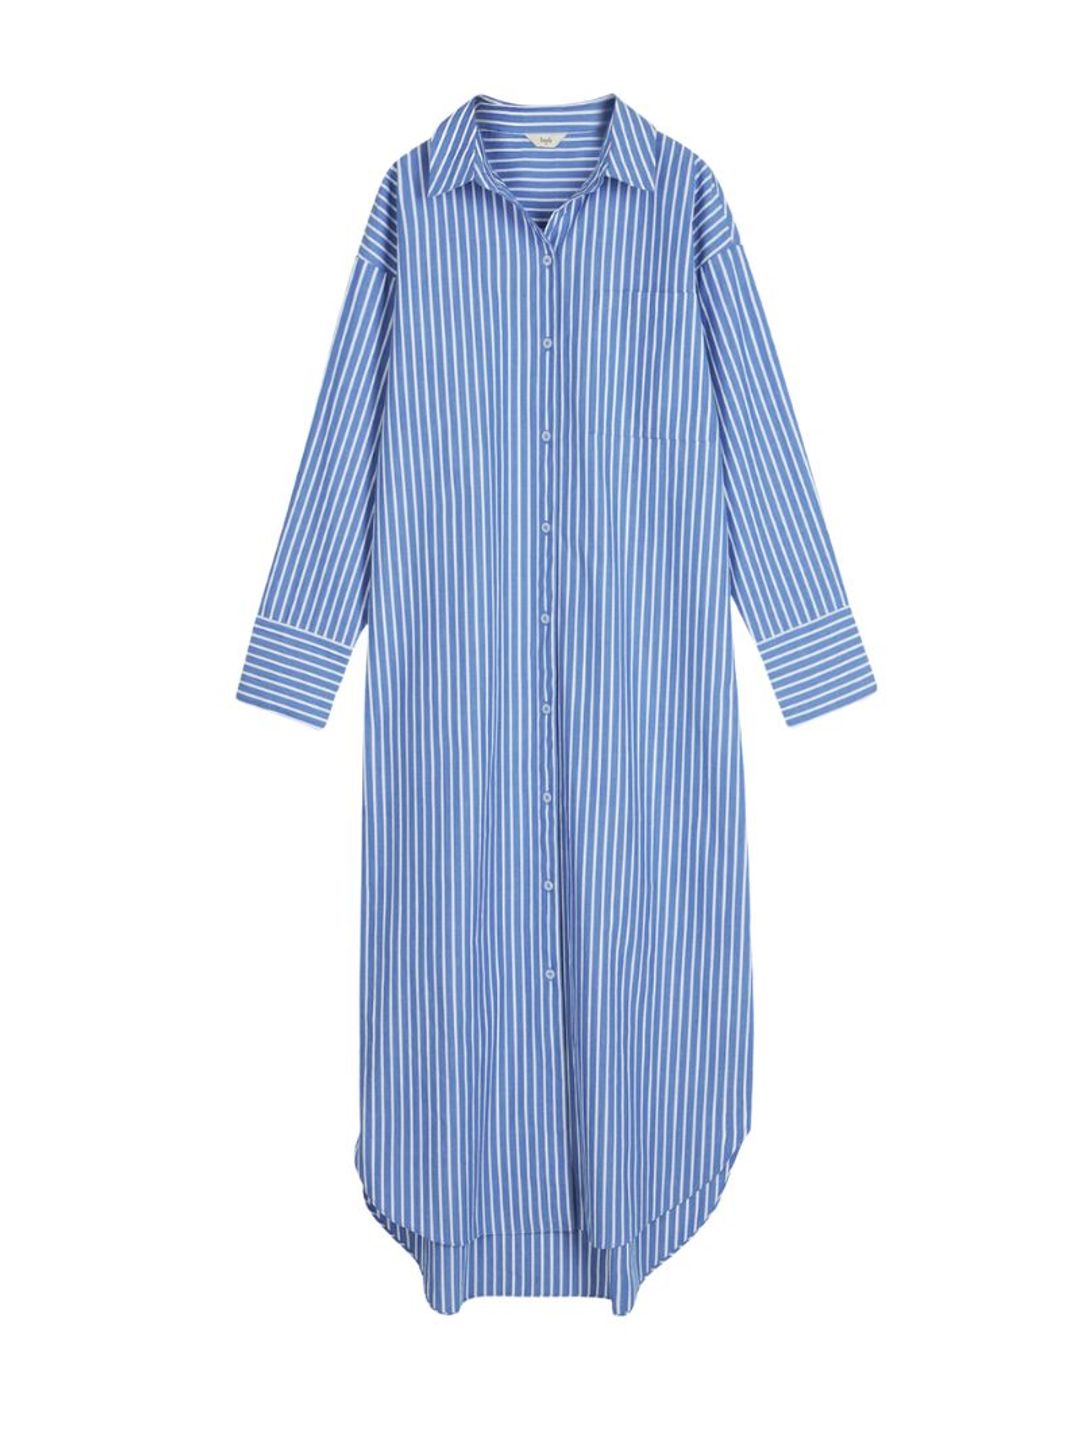 Blue and white pinstripe shirt dress